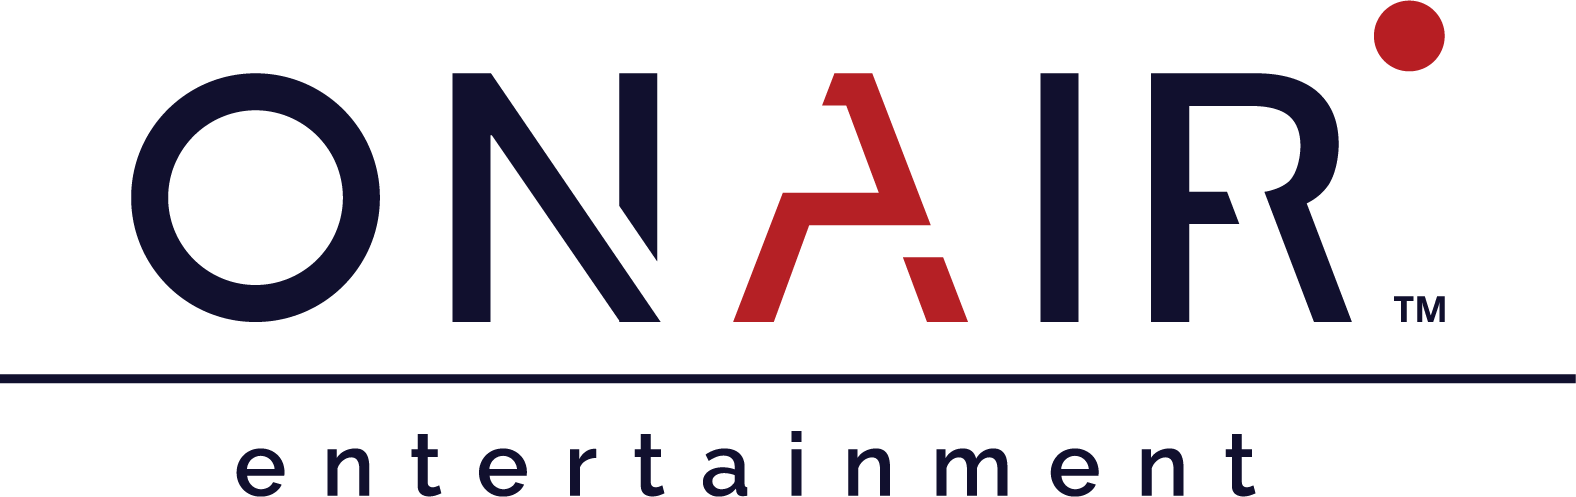 OnAir Entertainment logo